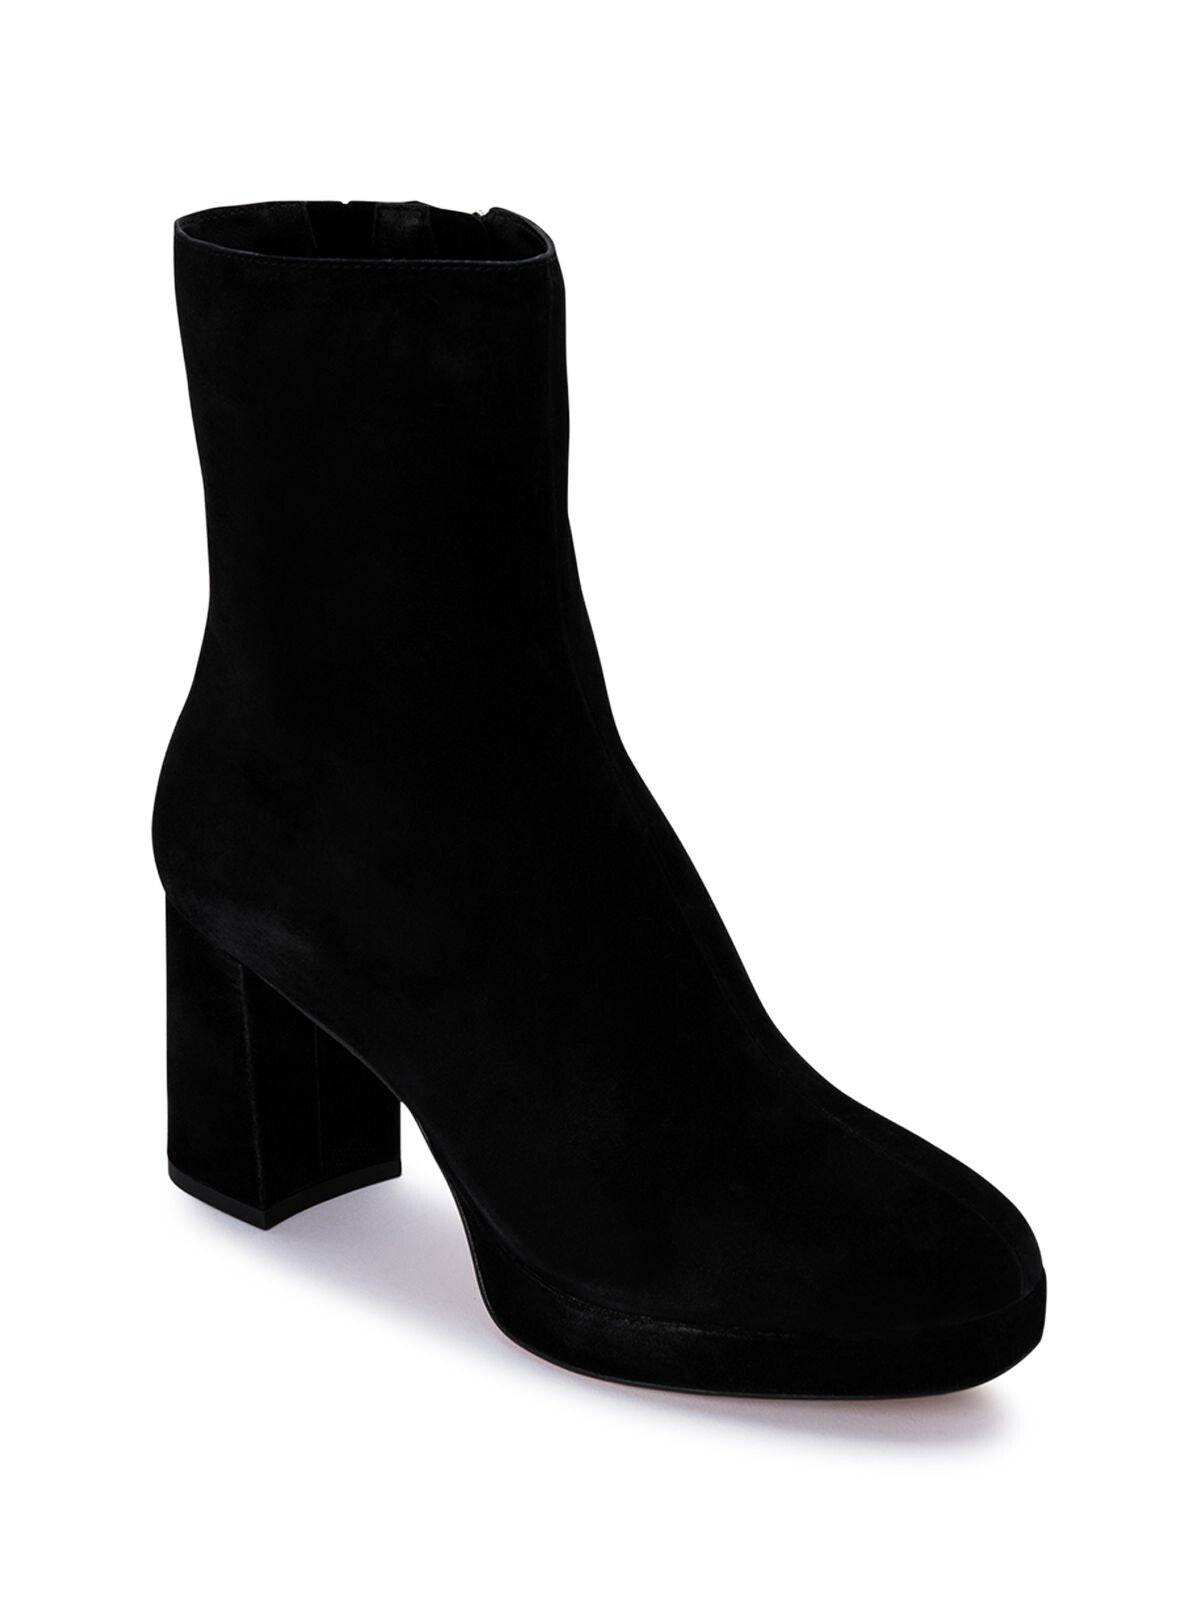 DOLCE VITA Womens Black Padded Goring Eden Square Toe Block Heel Zip-Up Leather Booties 10